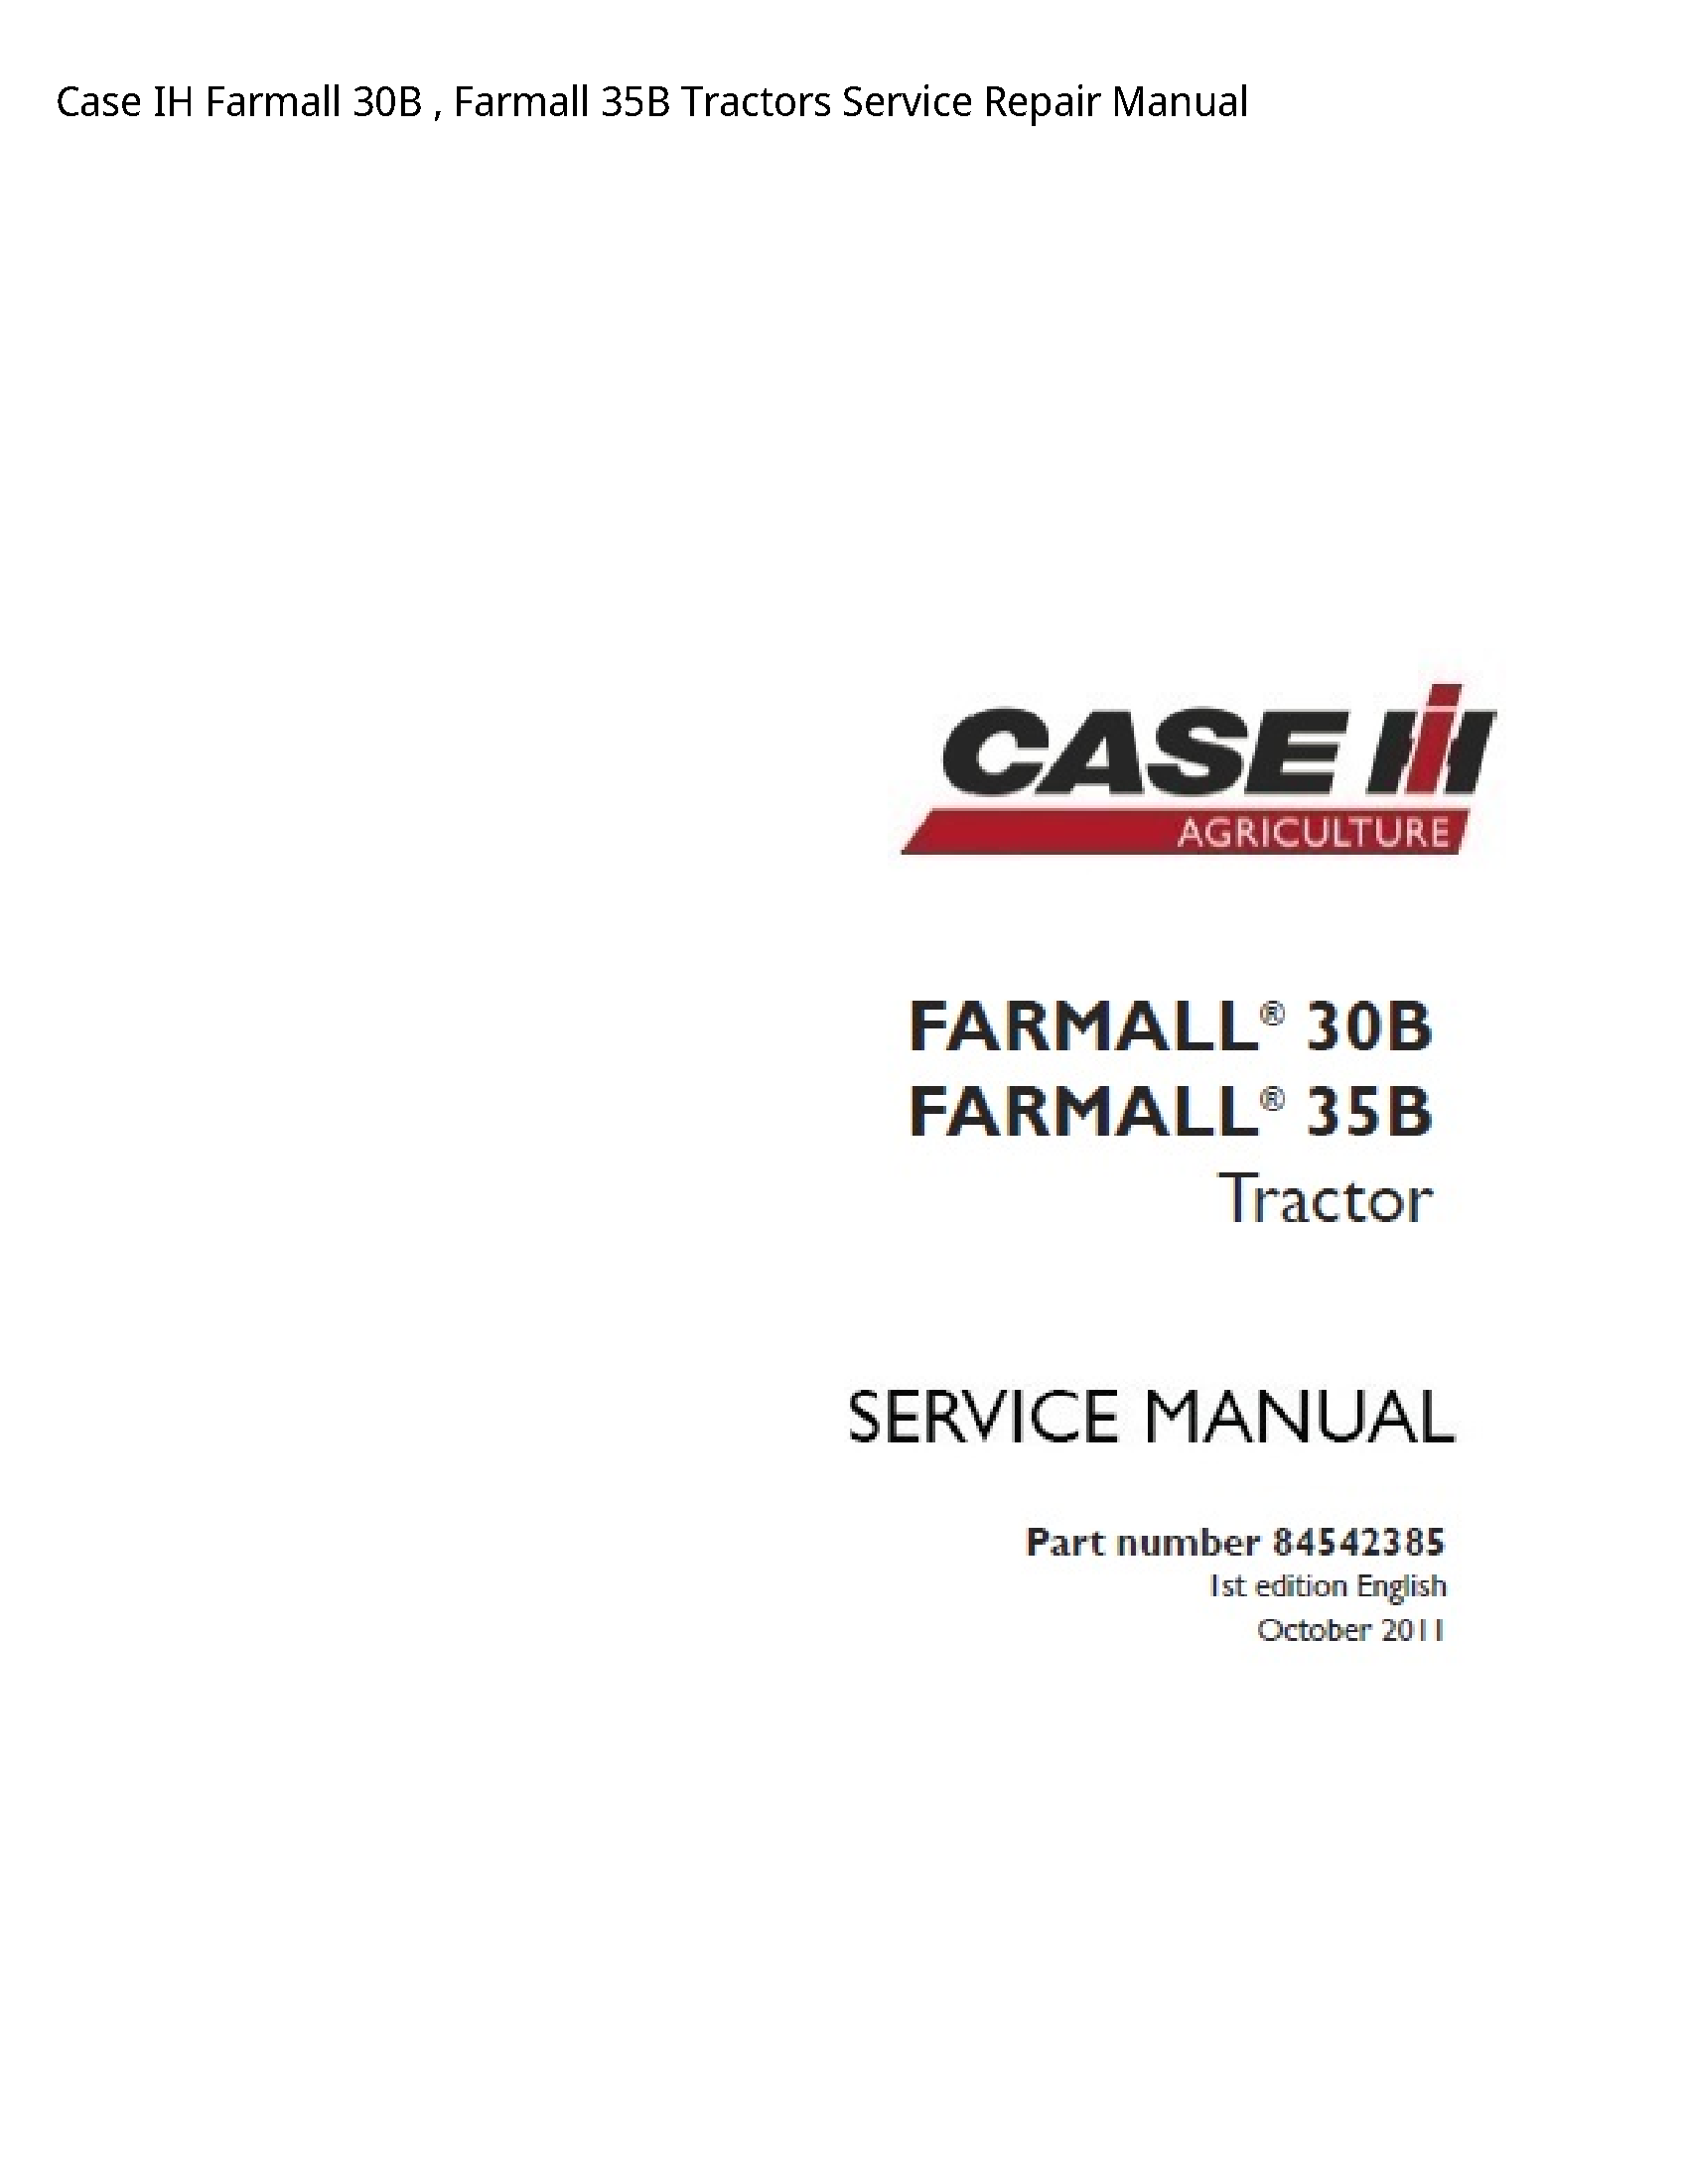 Case/Case IH 30B IH Farmall Farmall Tractors manual